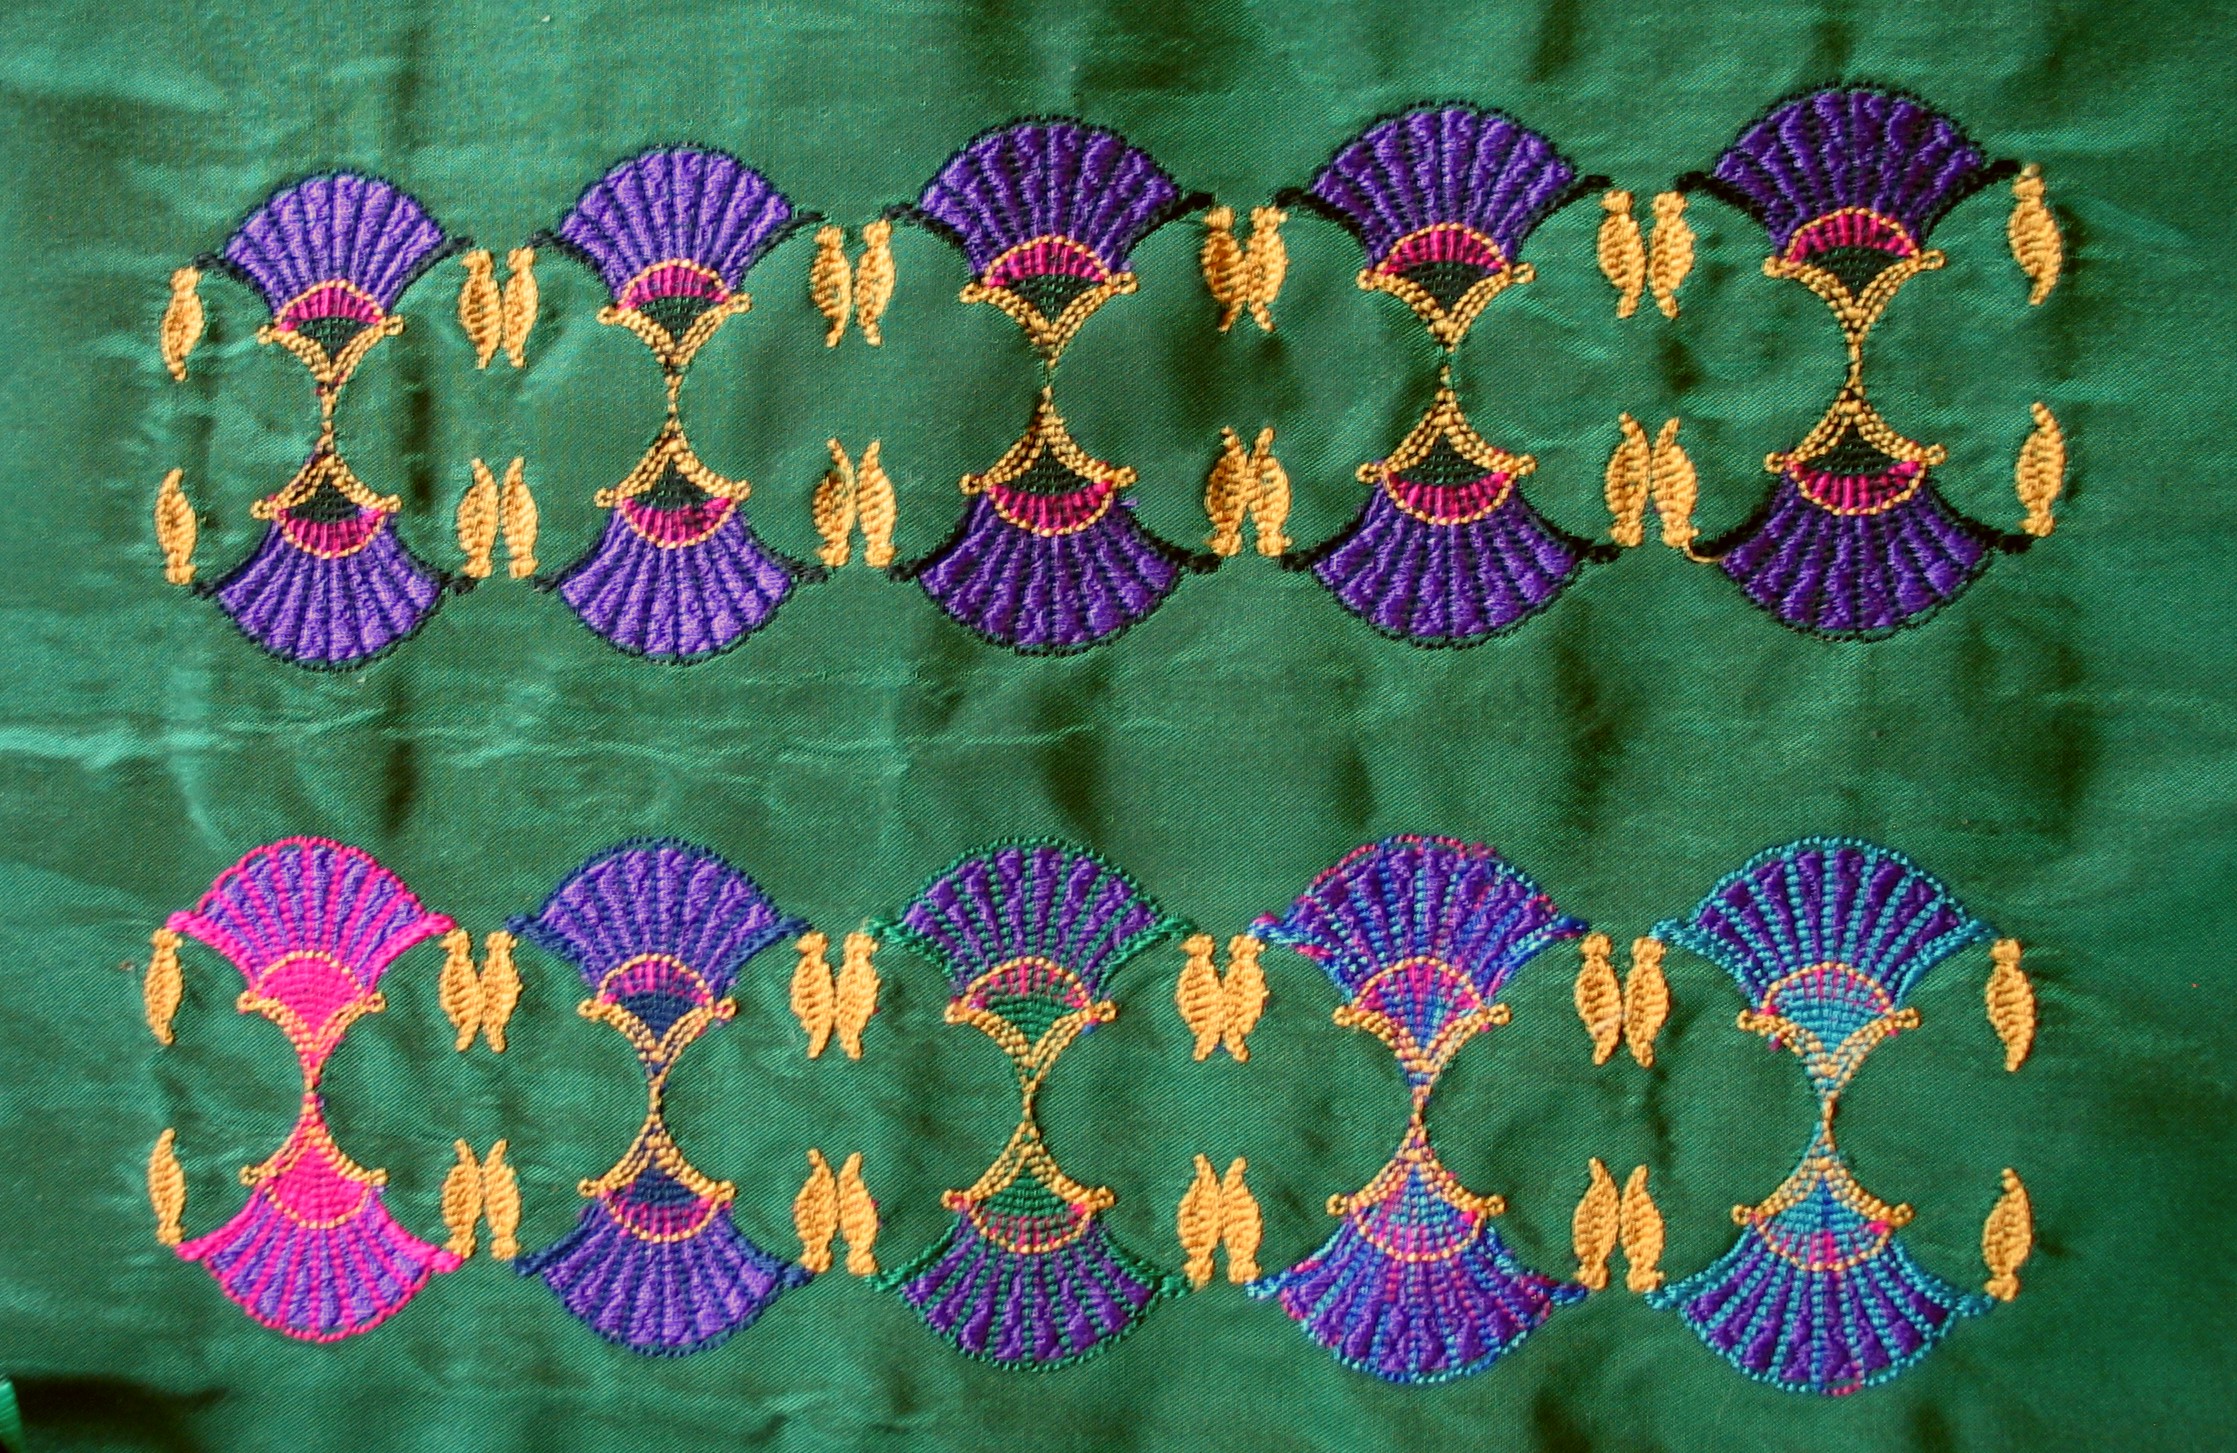 asian-fan-tassel-filled-redwork-border-embroidery